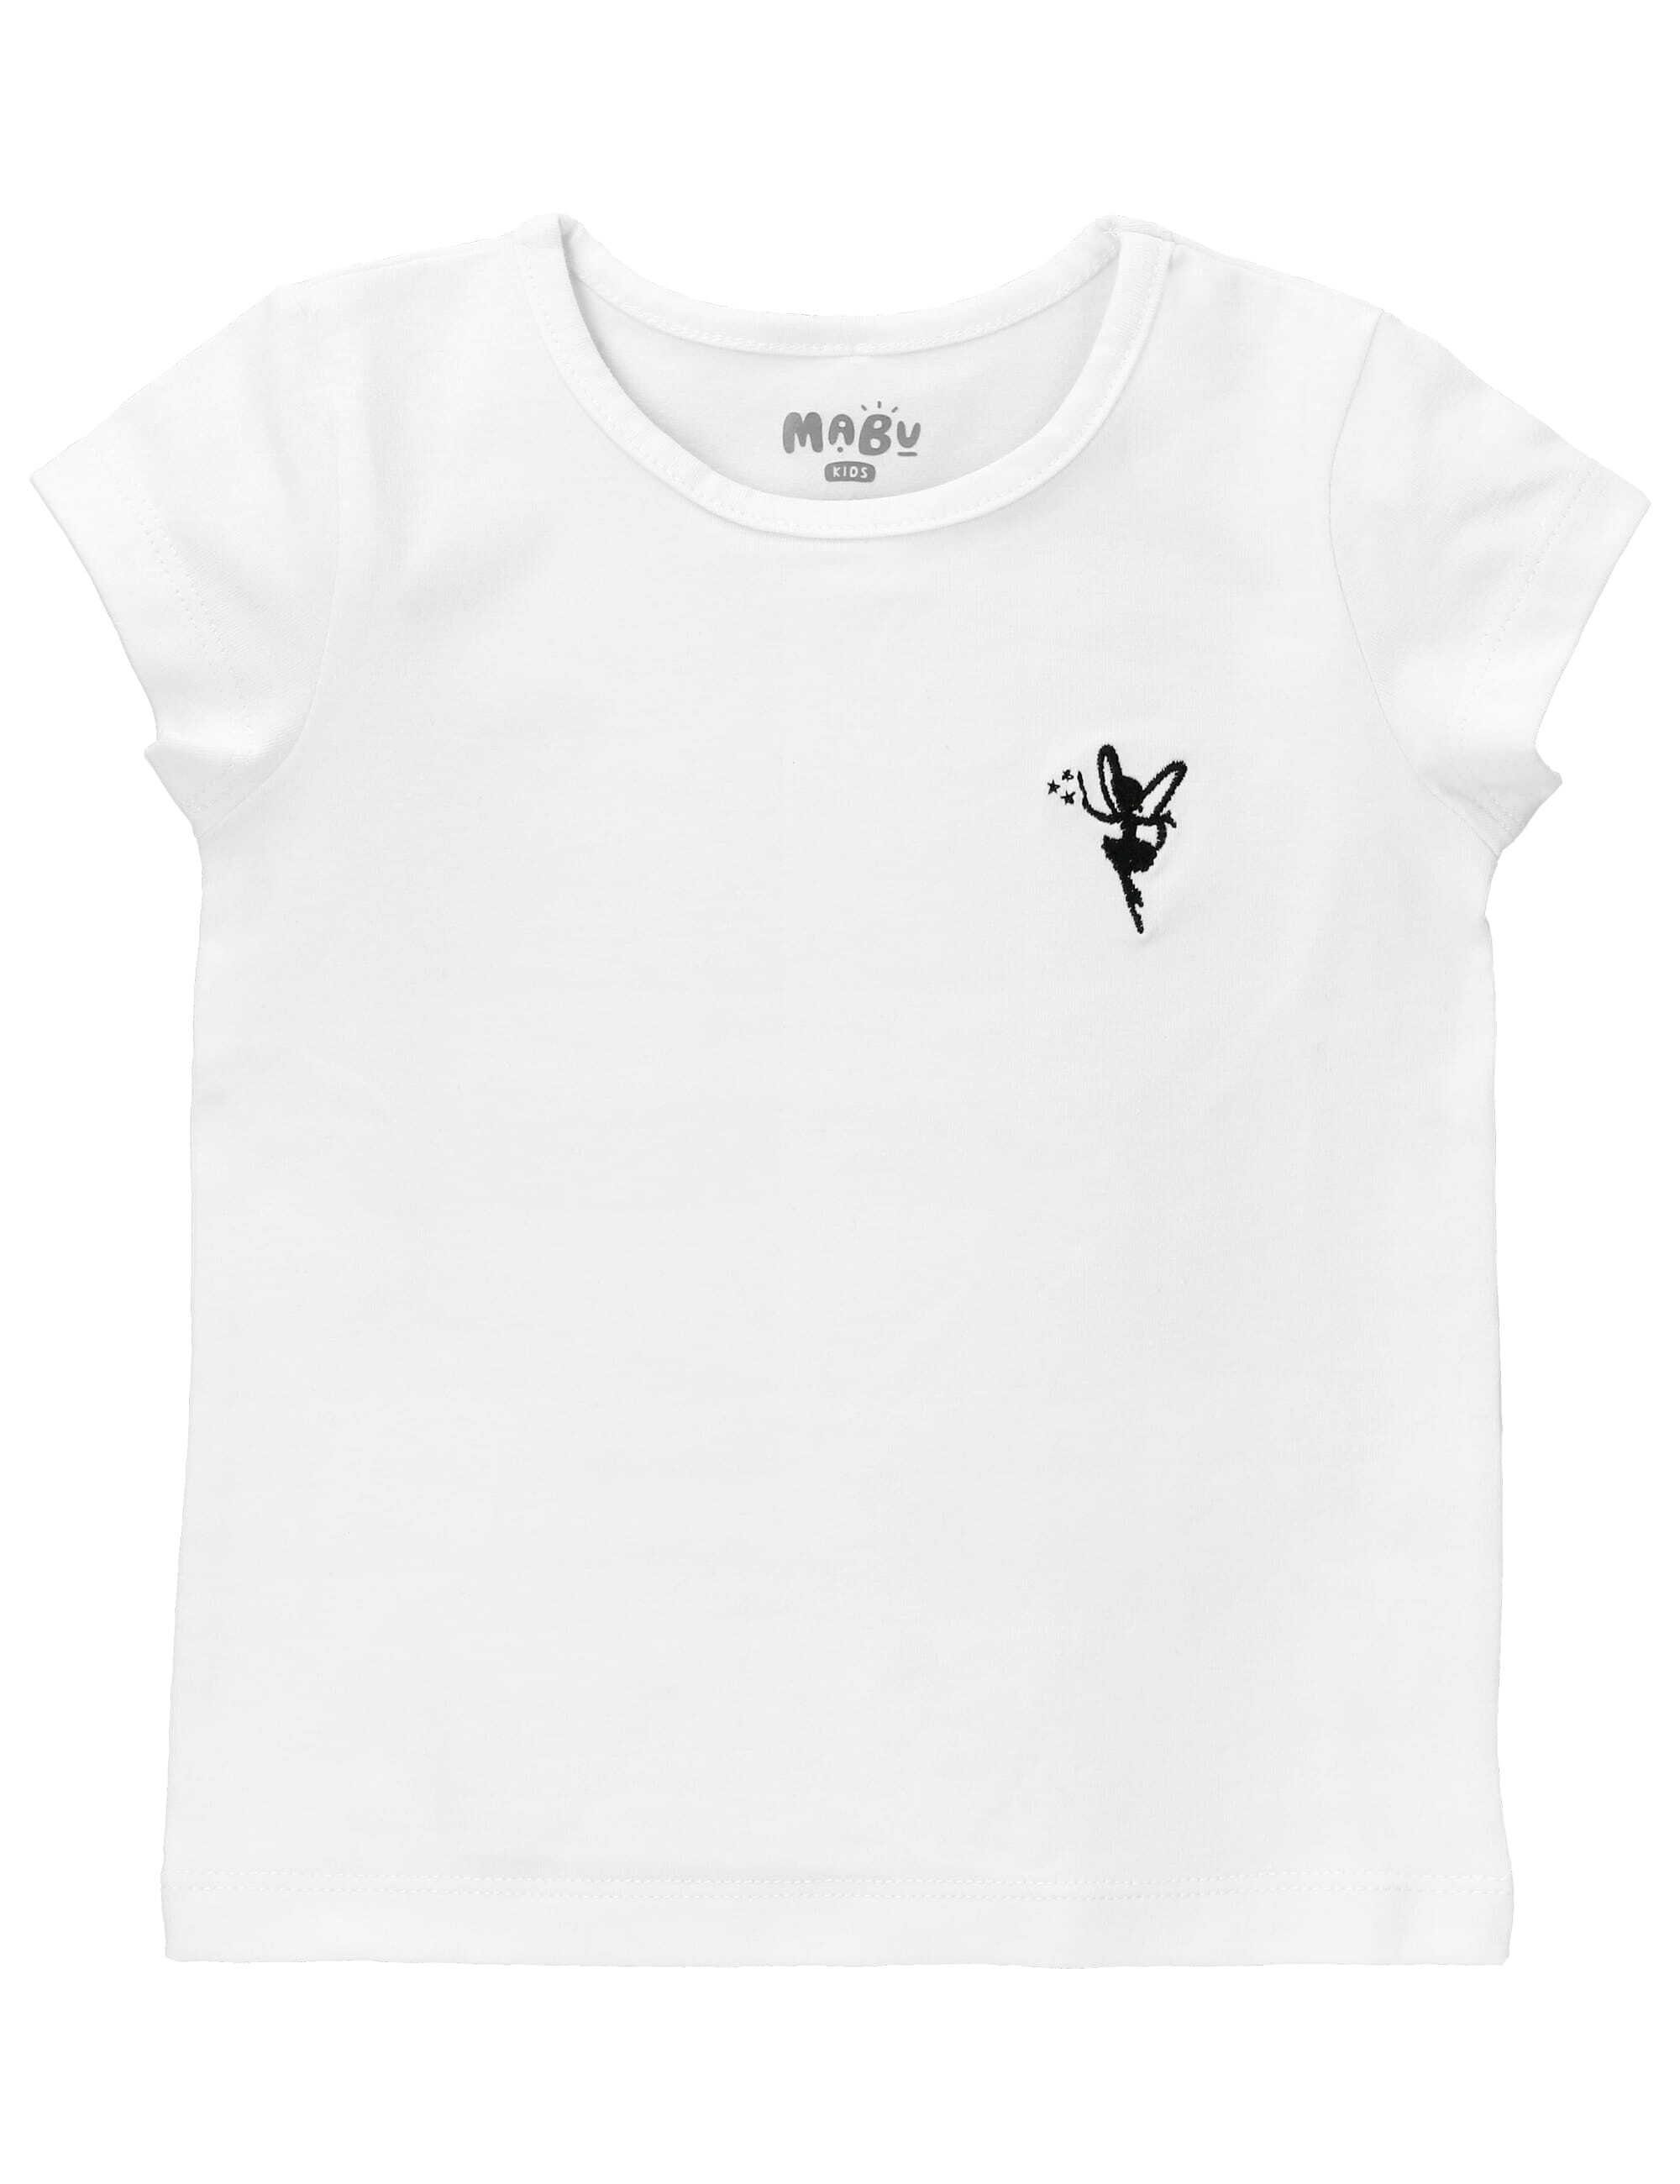 MaBu Kids Teile) Hose Shirt & 1-tlg., Weiß/Grau (Set, 2 Set